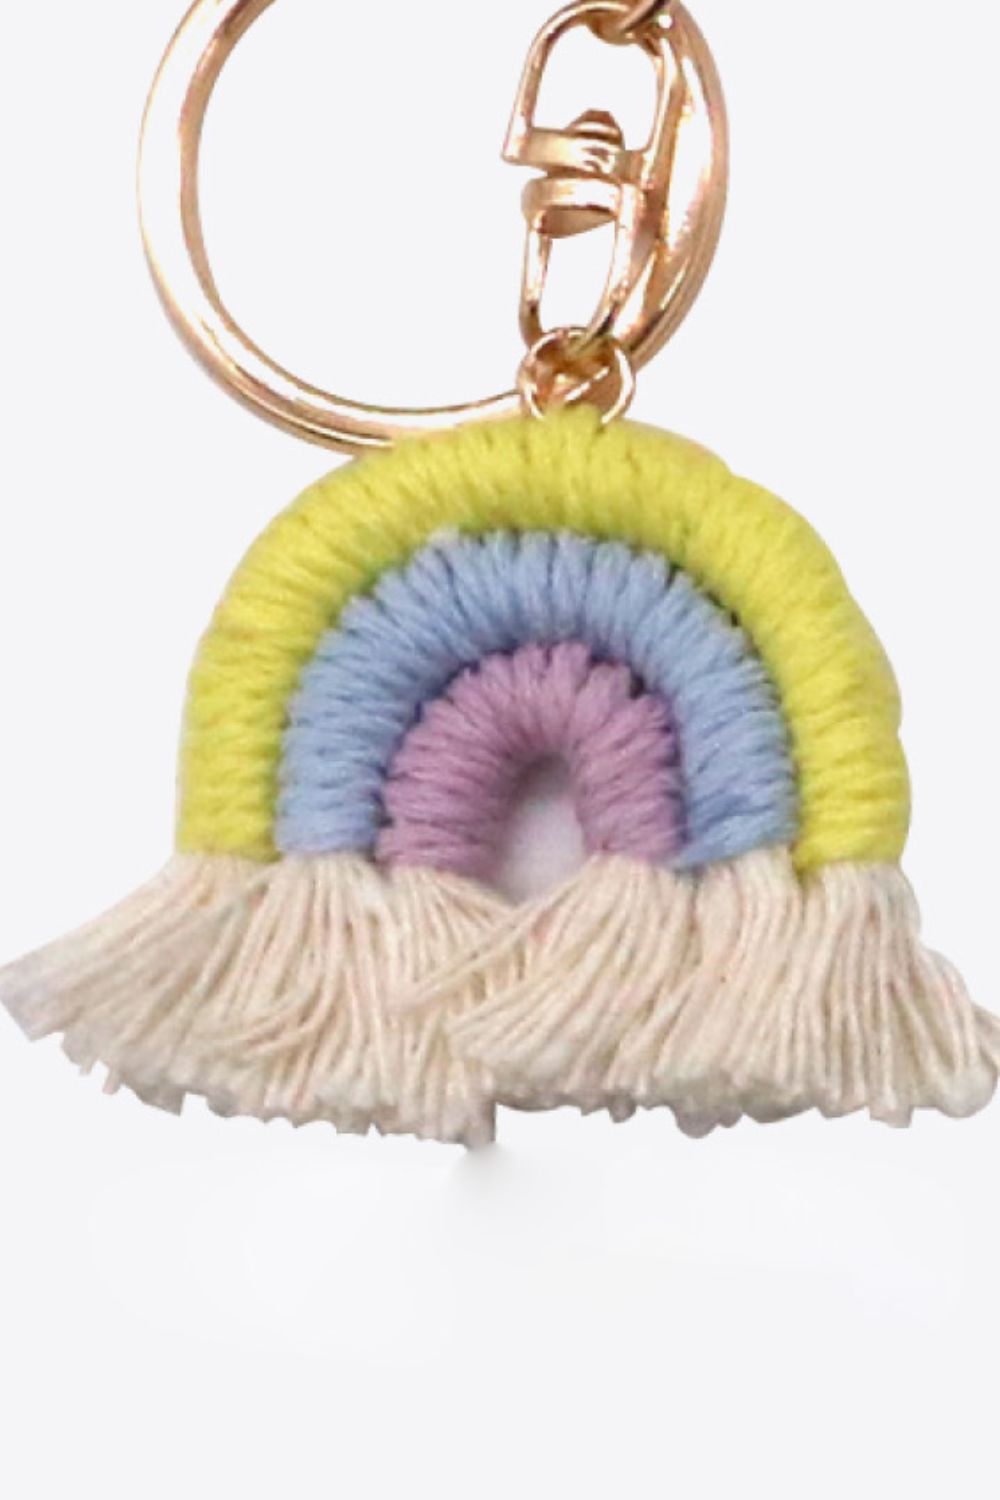 Colorful Boho RAINBOW Handmade Woven Tassel Keychain Ring with Clasp